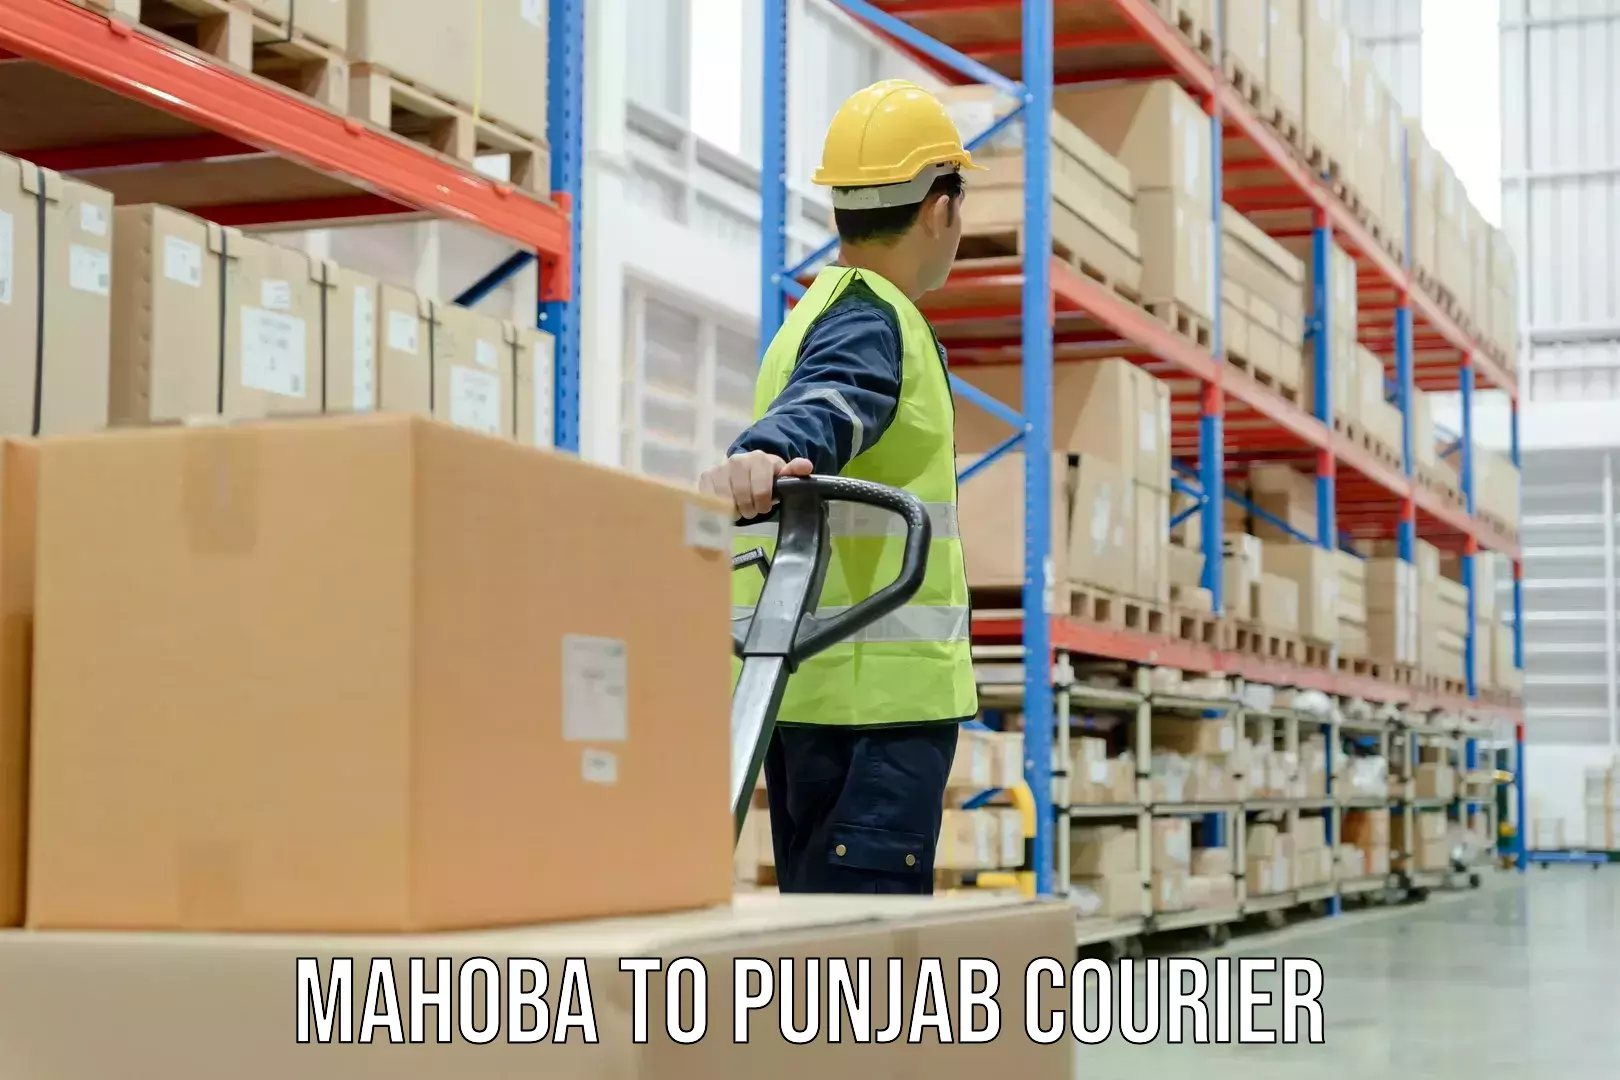 Courier service comparison Mahoba to Ajnala